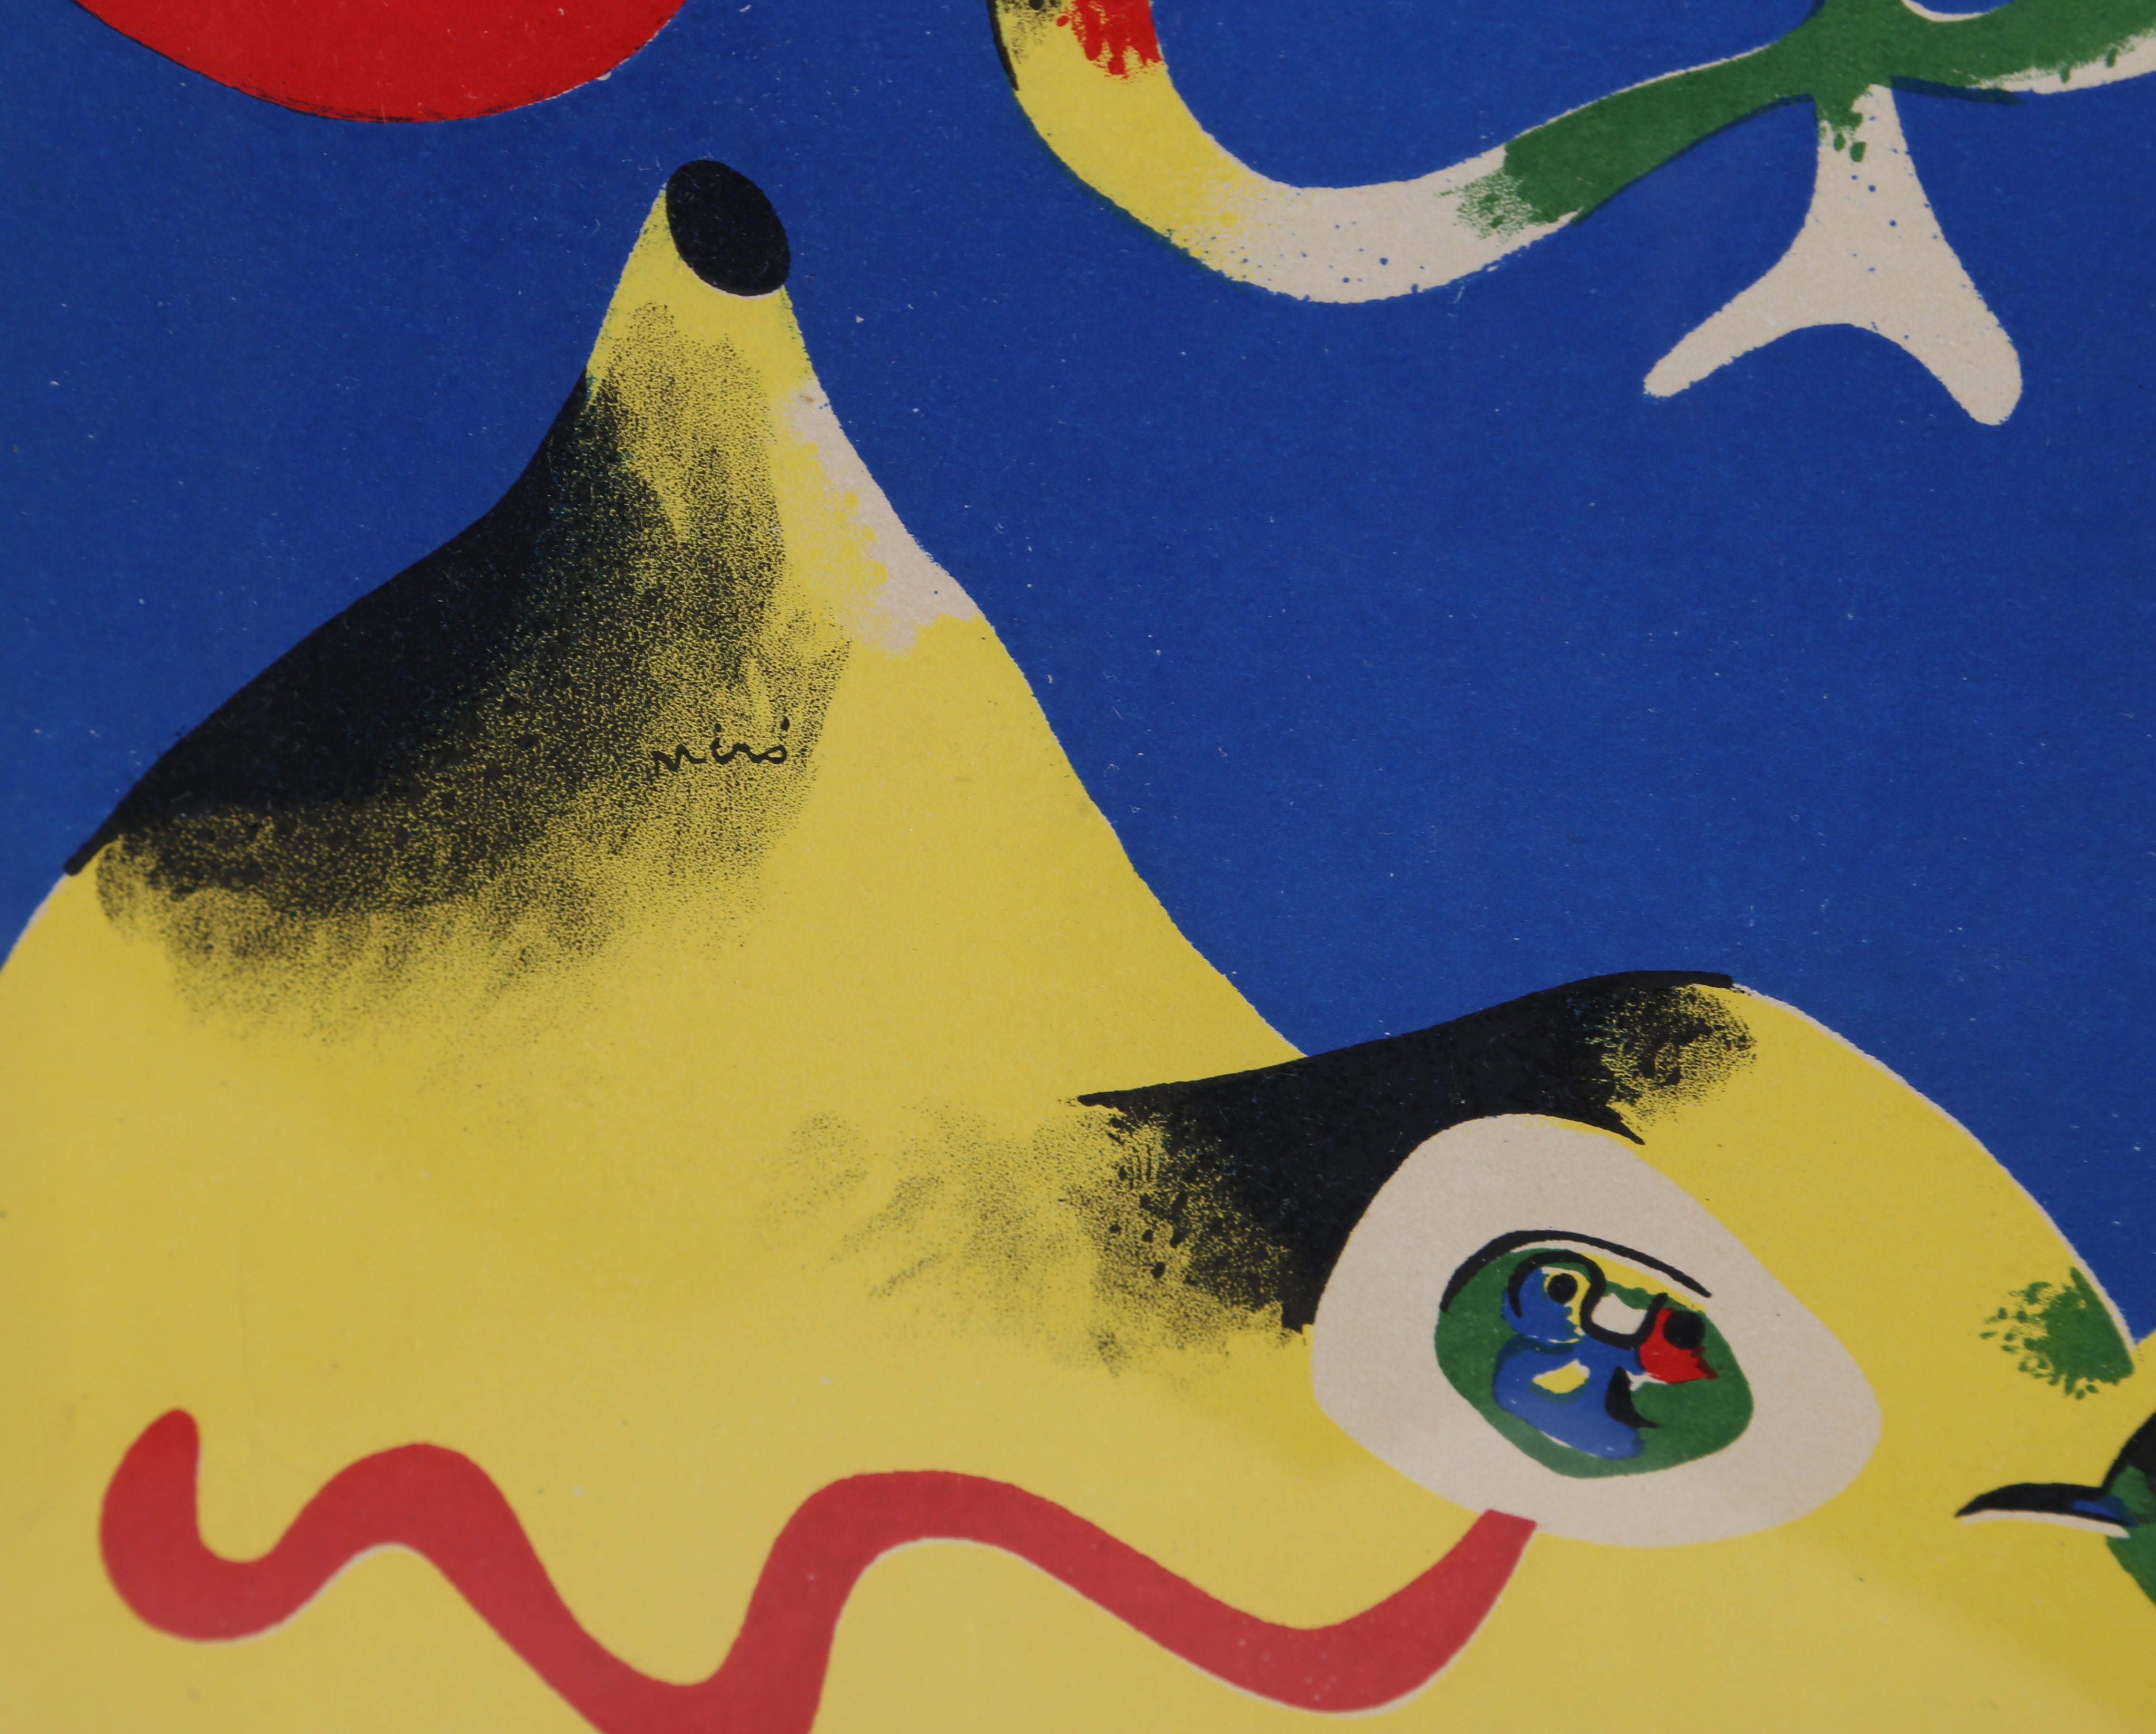 Air - Print by Joan Miró